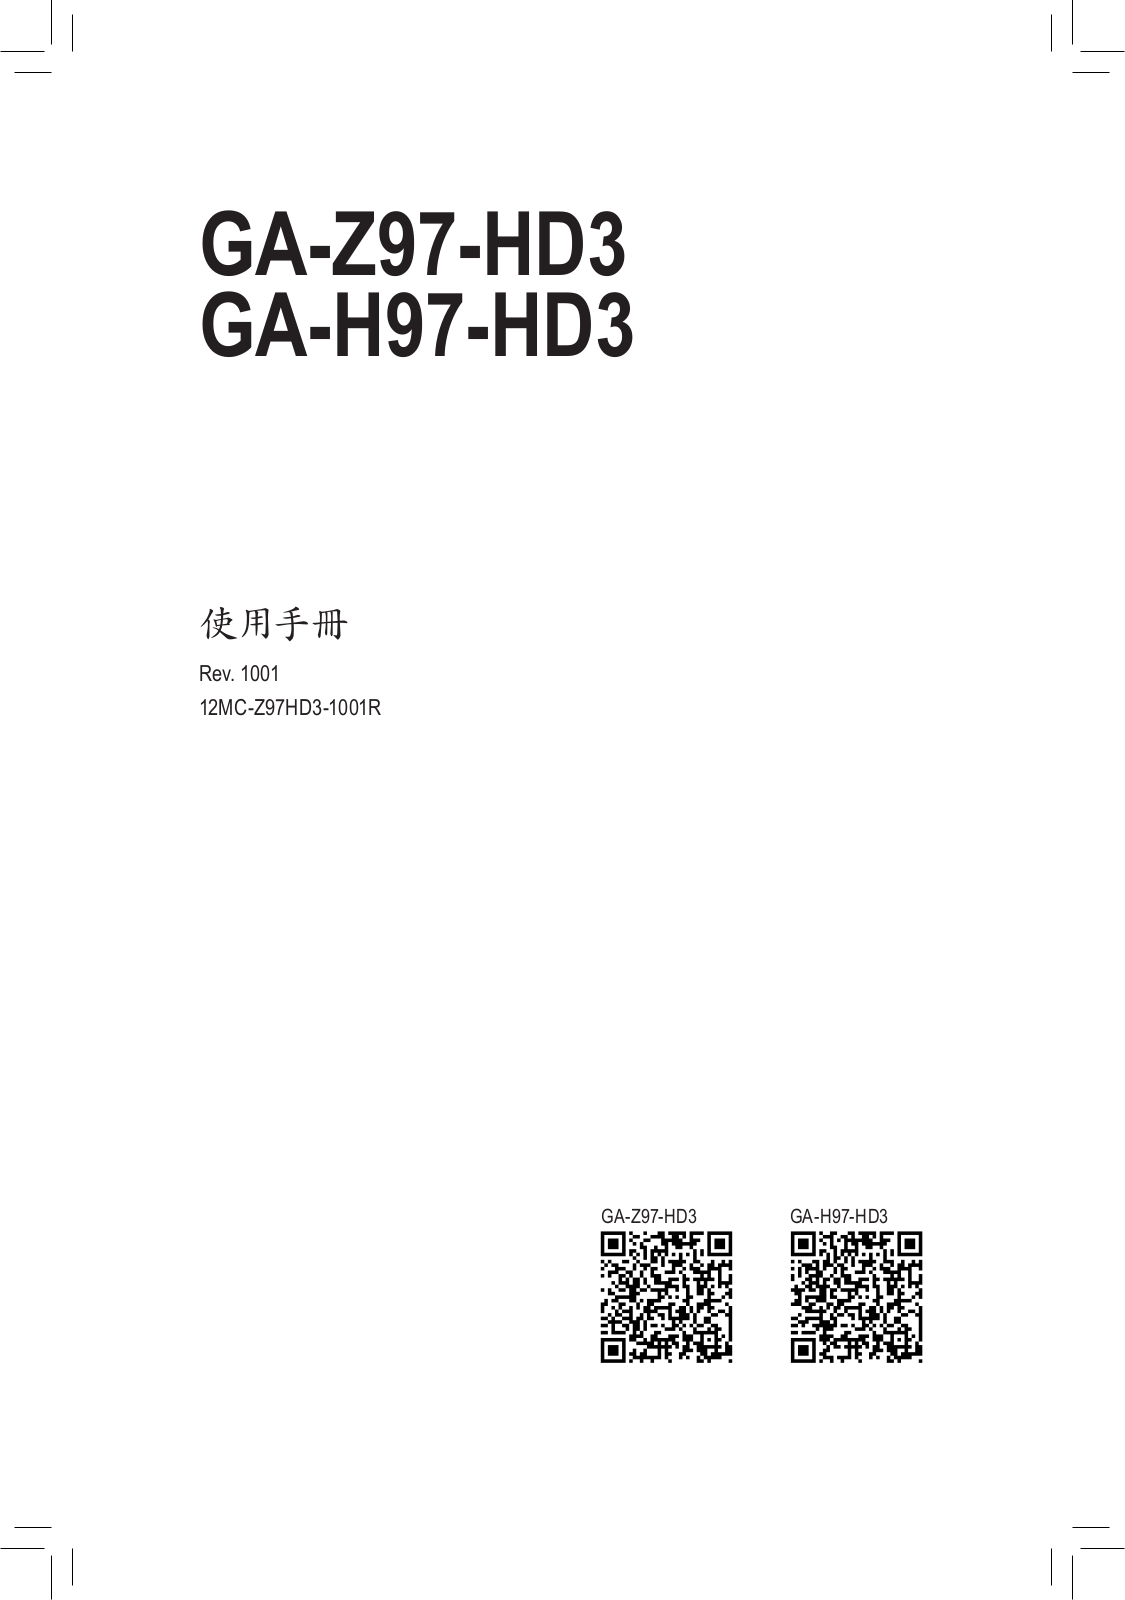 Gigabyte GA-H97-HD3, GA-Z97-HD3 User Manual